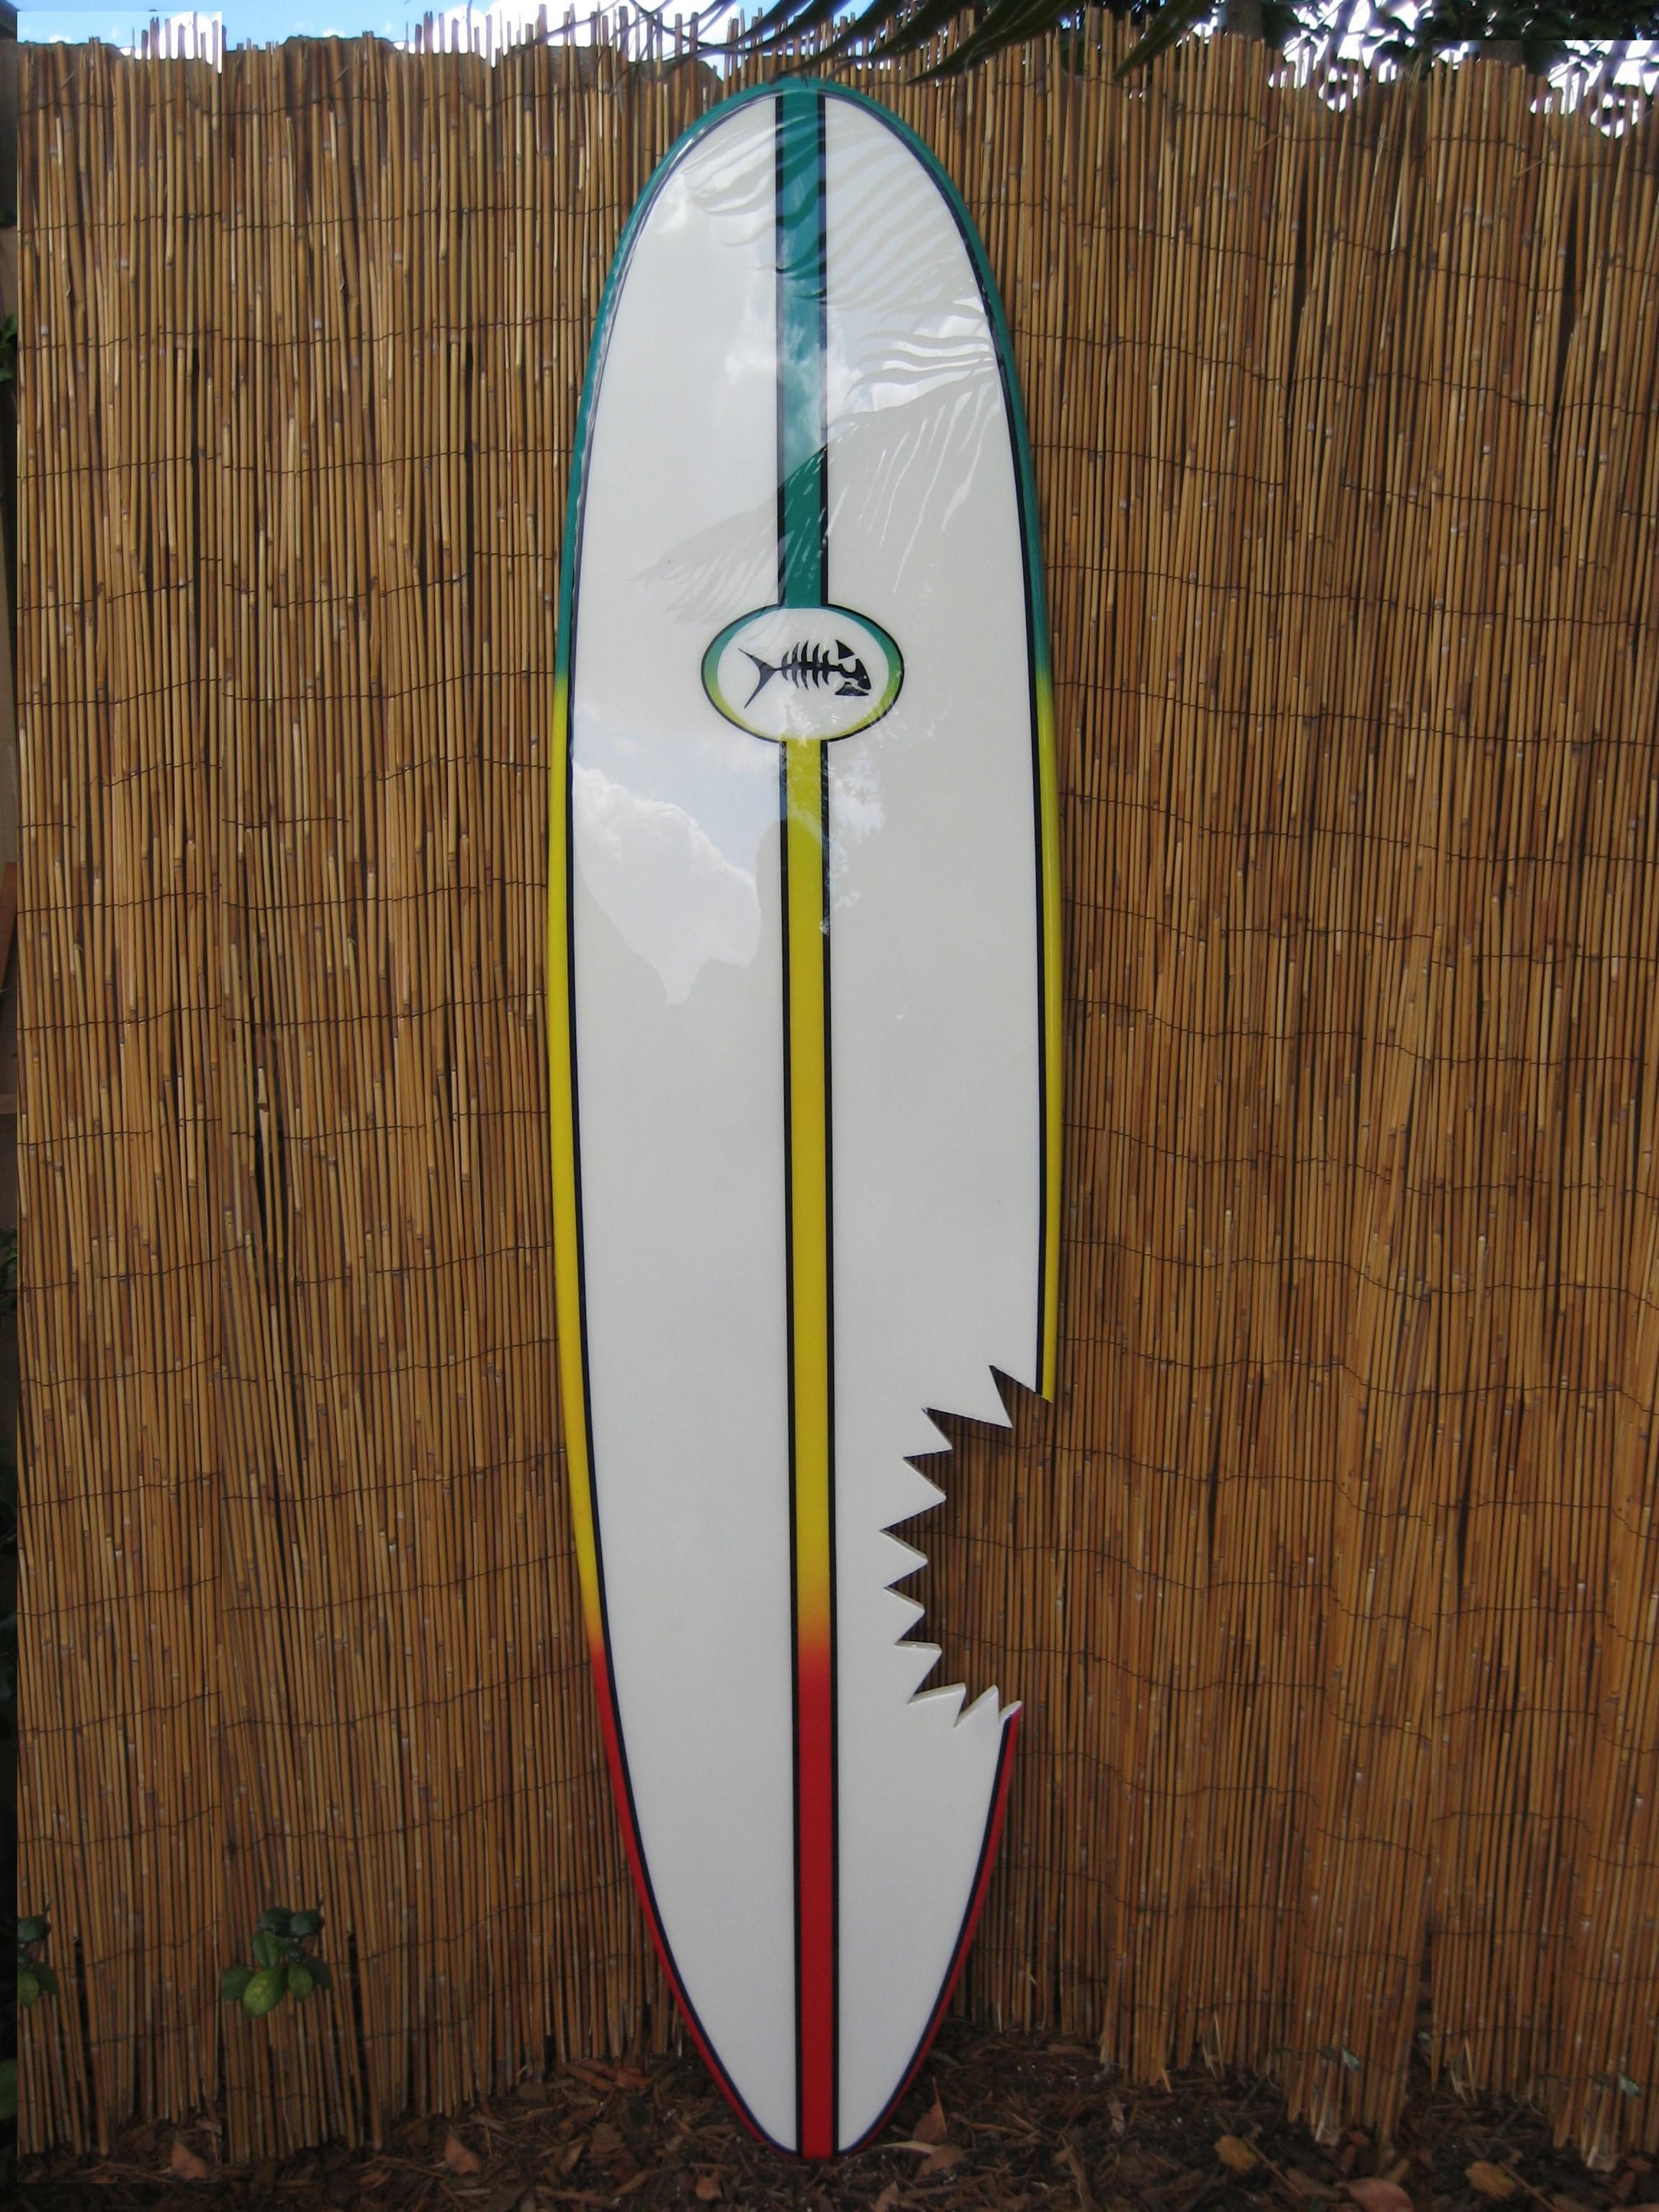 Decorative Wood Surfboard Art Wall Surf Surfboard Decor In Decorative Surfboard Wall Art (View 6 of 20)